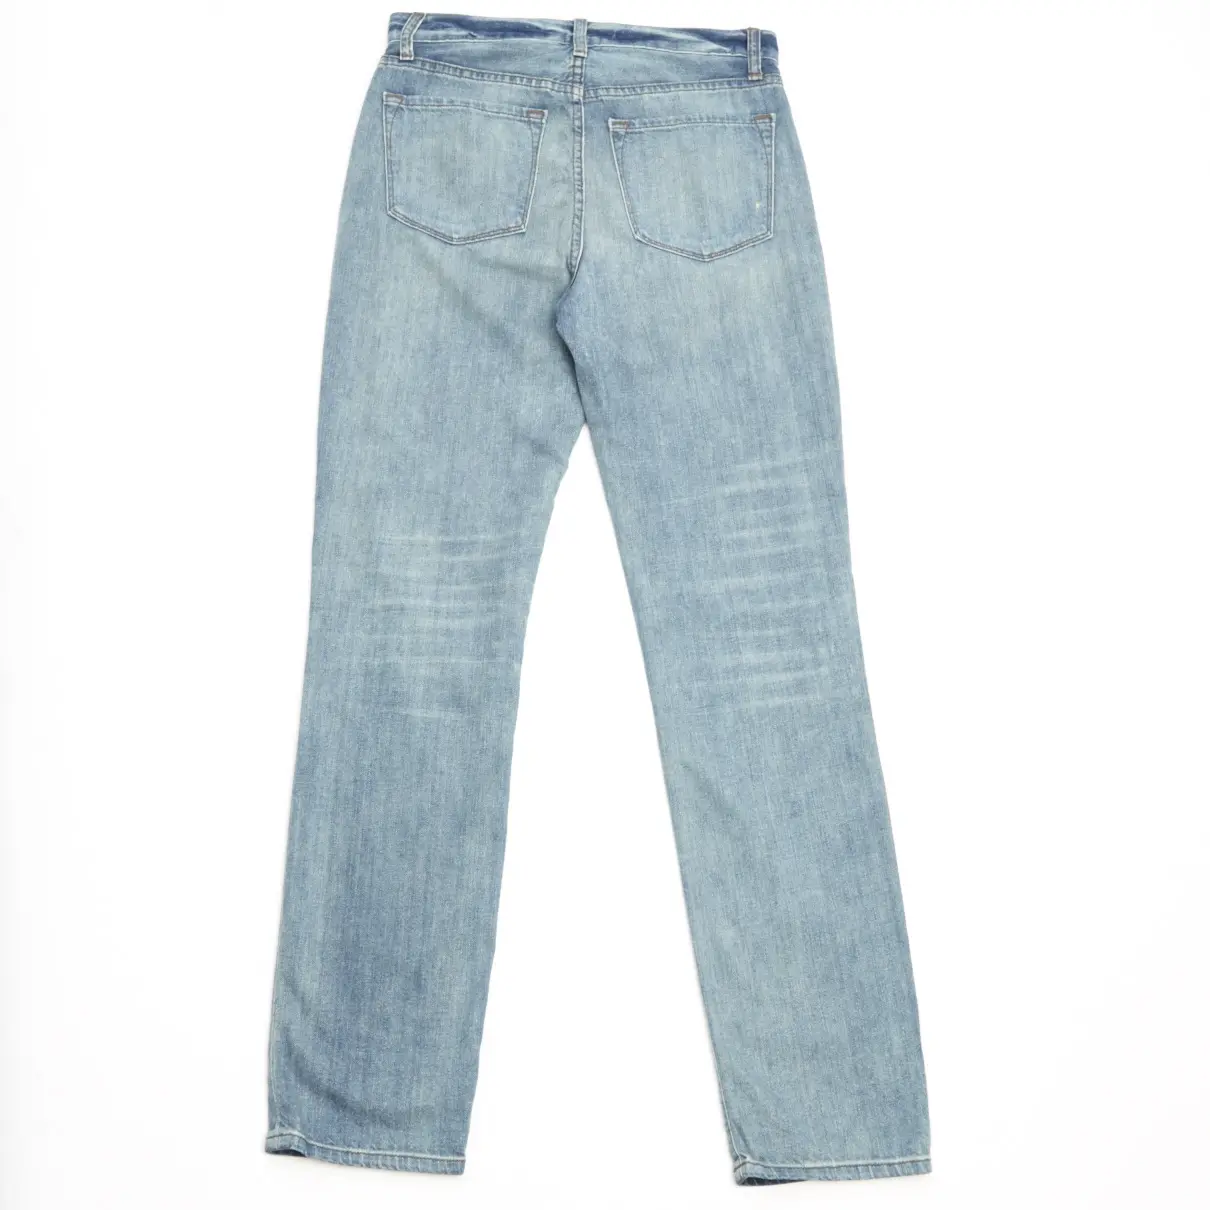 J Brand Boyfriend jeans for sale